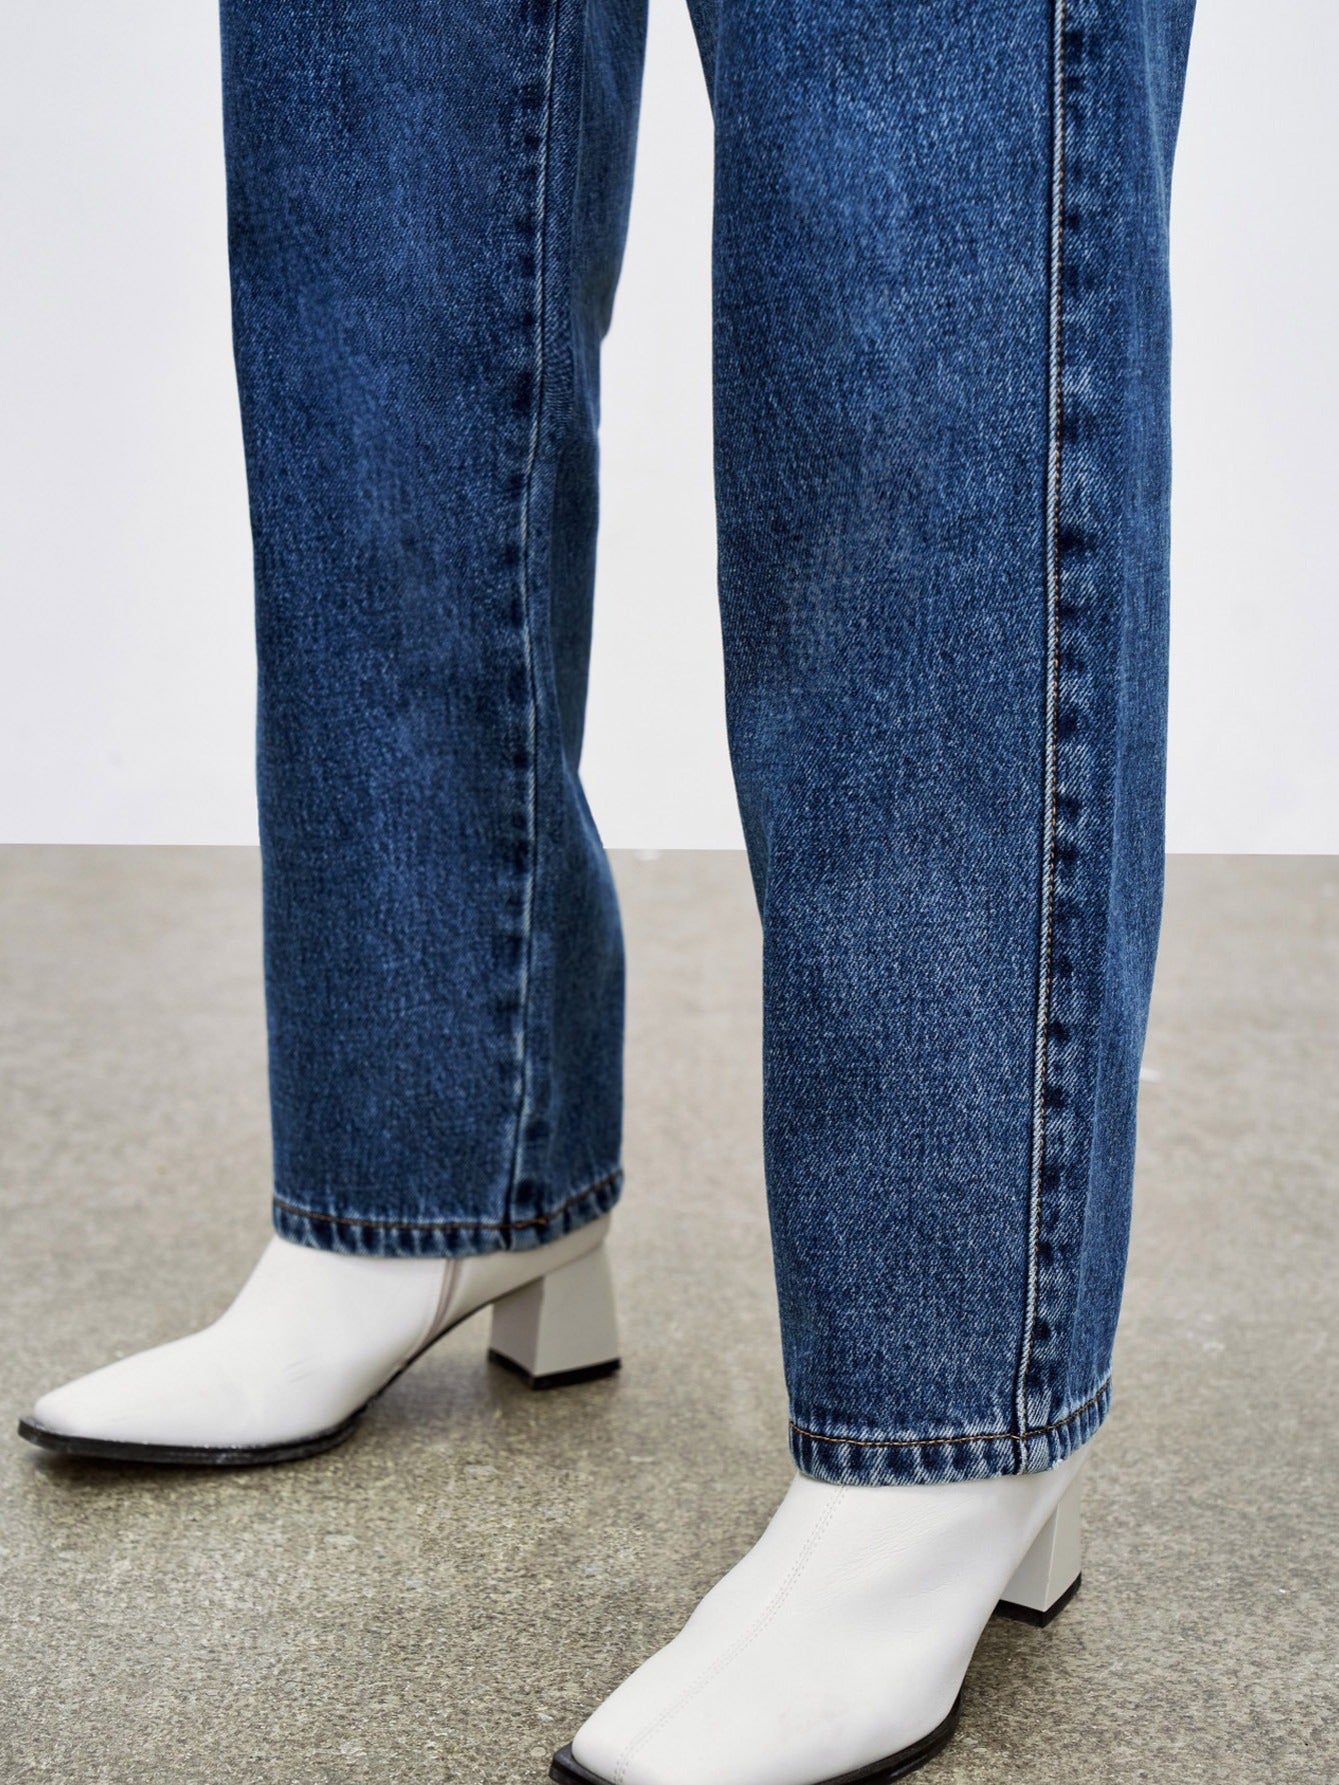 「binfenxie」High Waist Loose Fit Straight Leg Jeans, Casual Comfort Slash Pockets Denim Pants, Women's Denim Jeans & Clothing